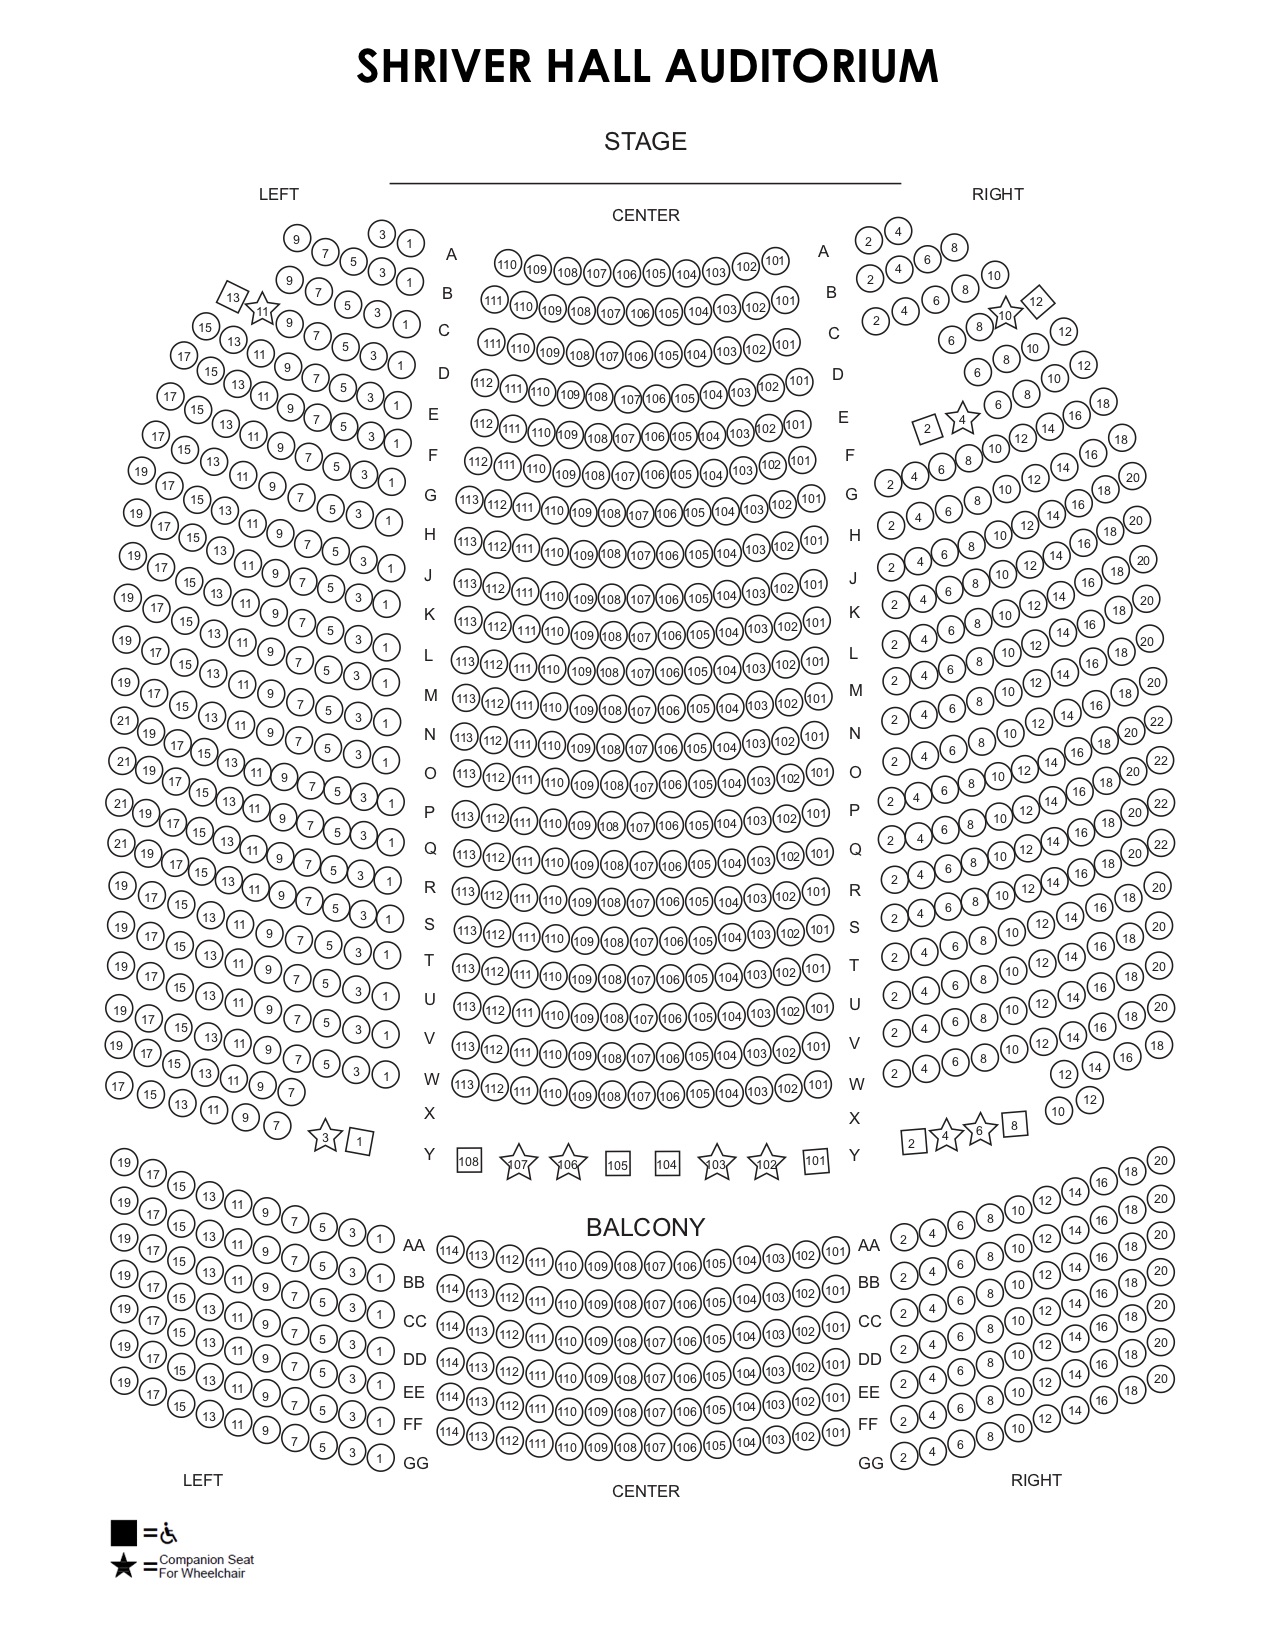 Seating Chart for Shriver Hall